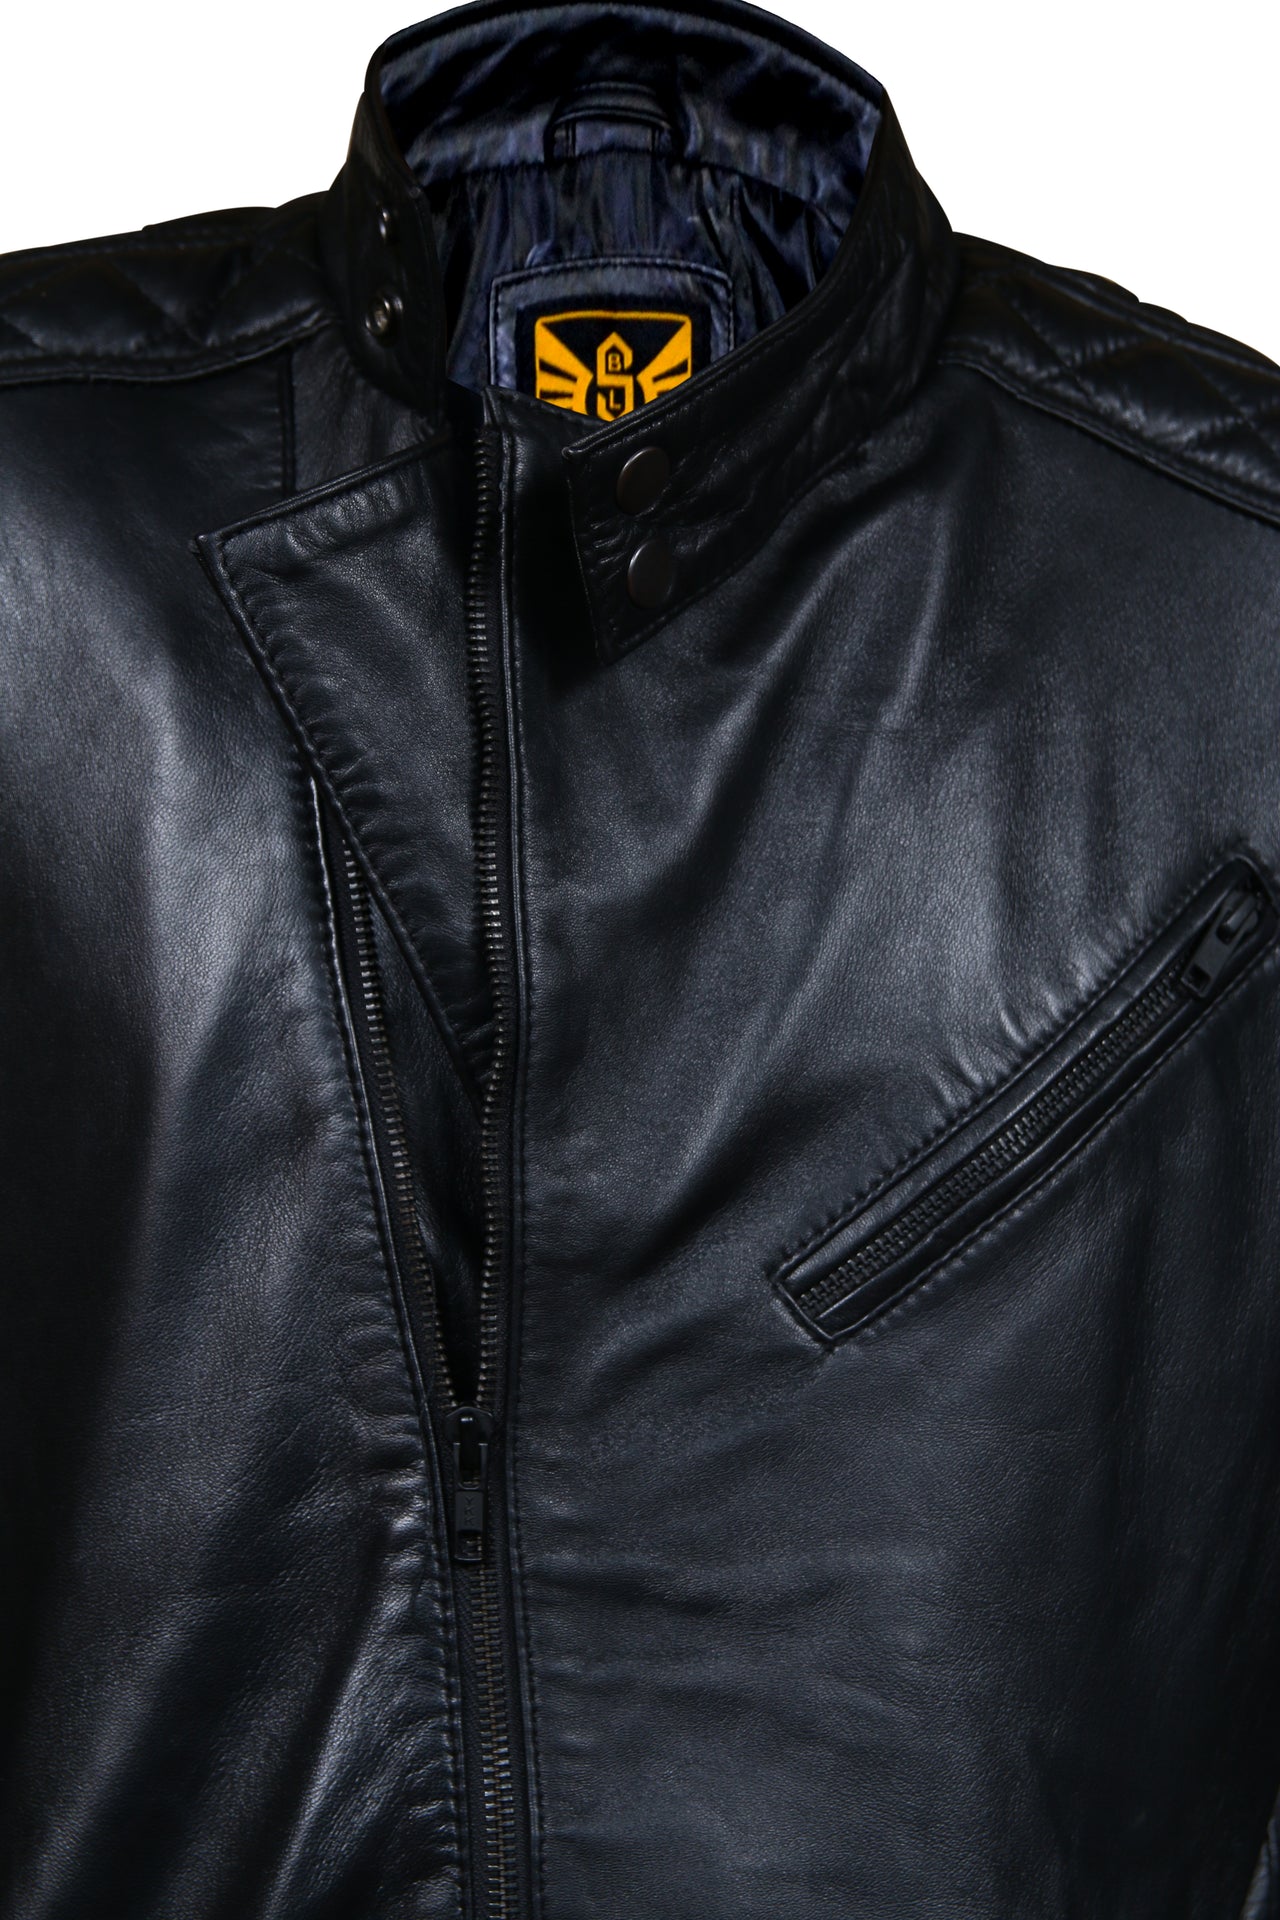 Metal Gear Solid 5 The Phantom Pain Snake Biker Leather Jacket